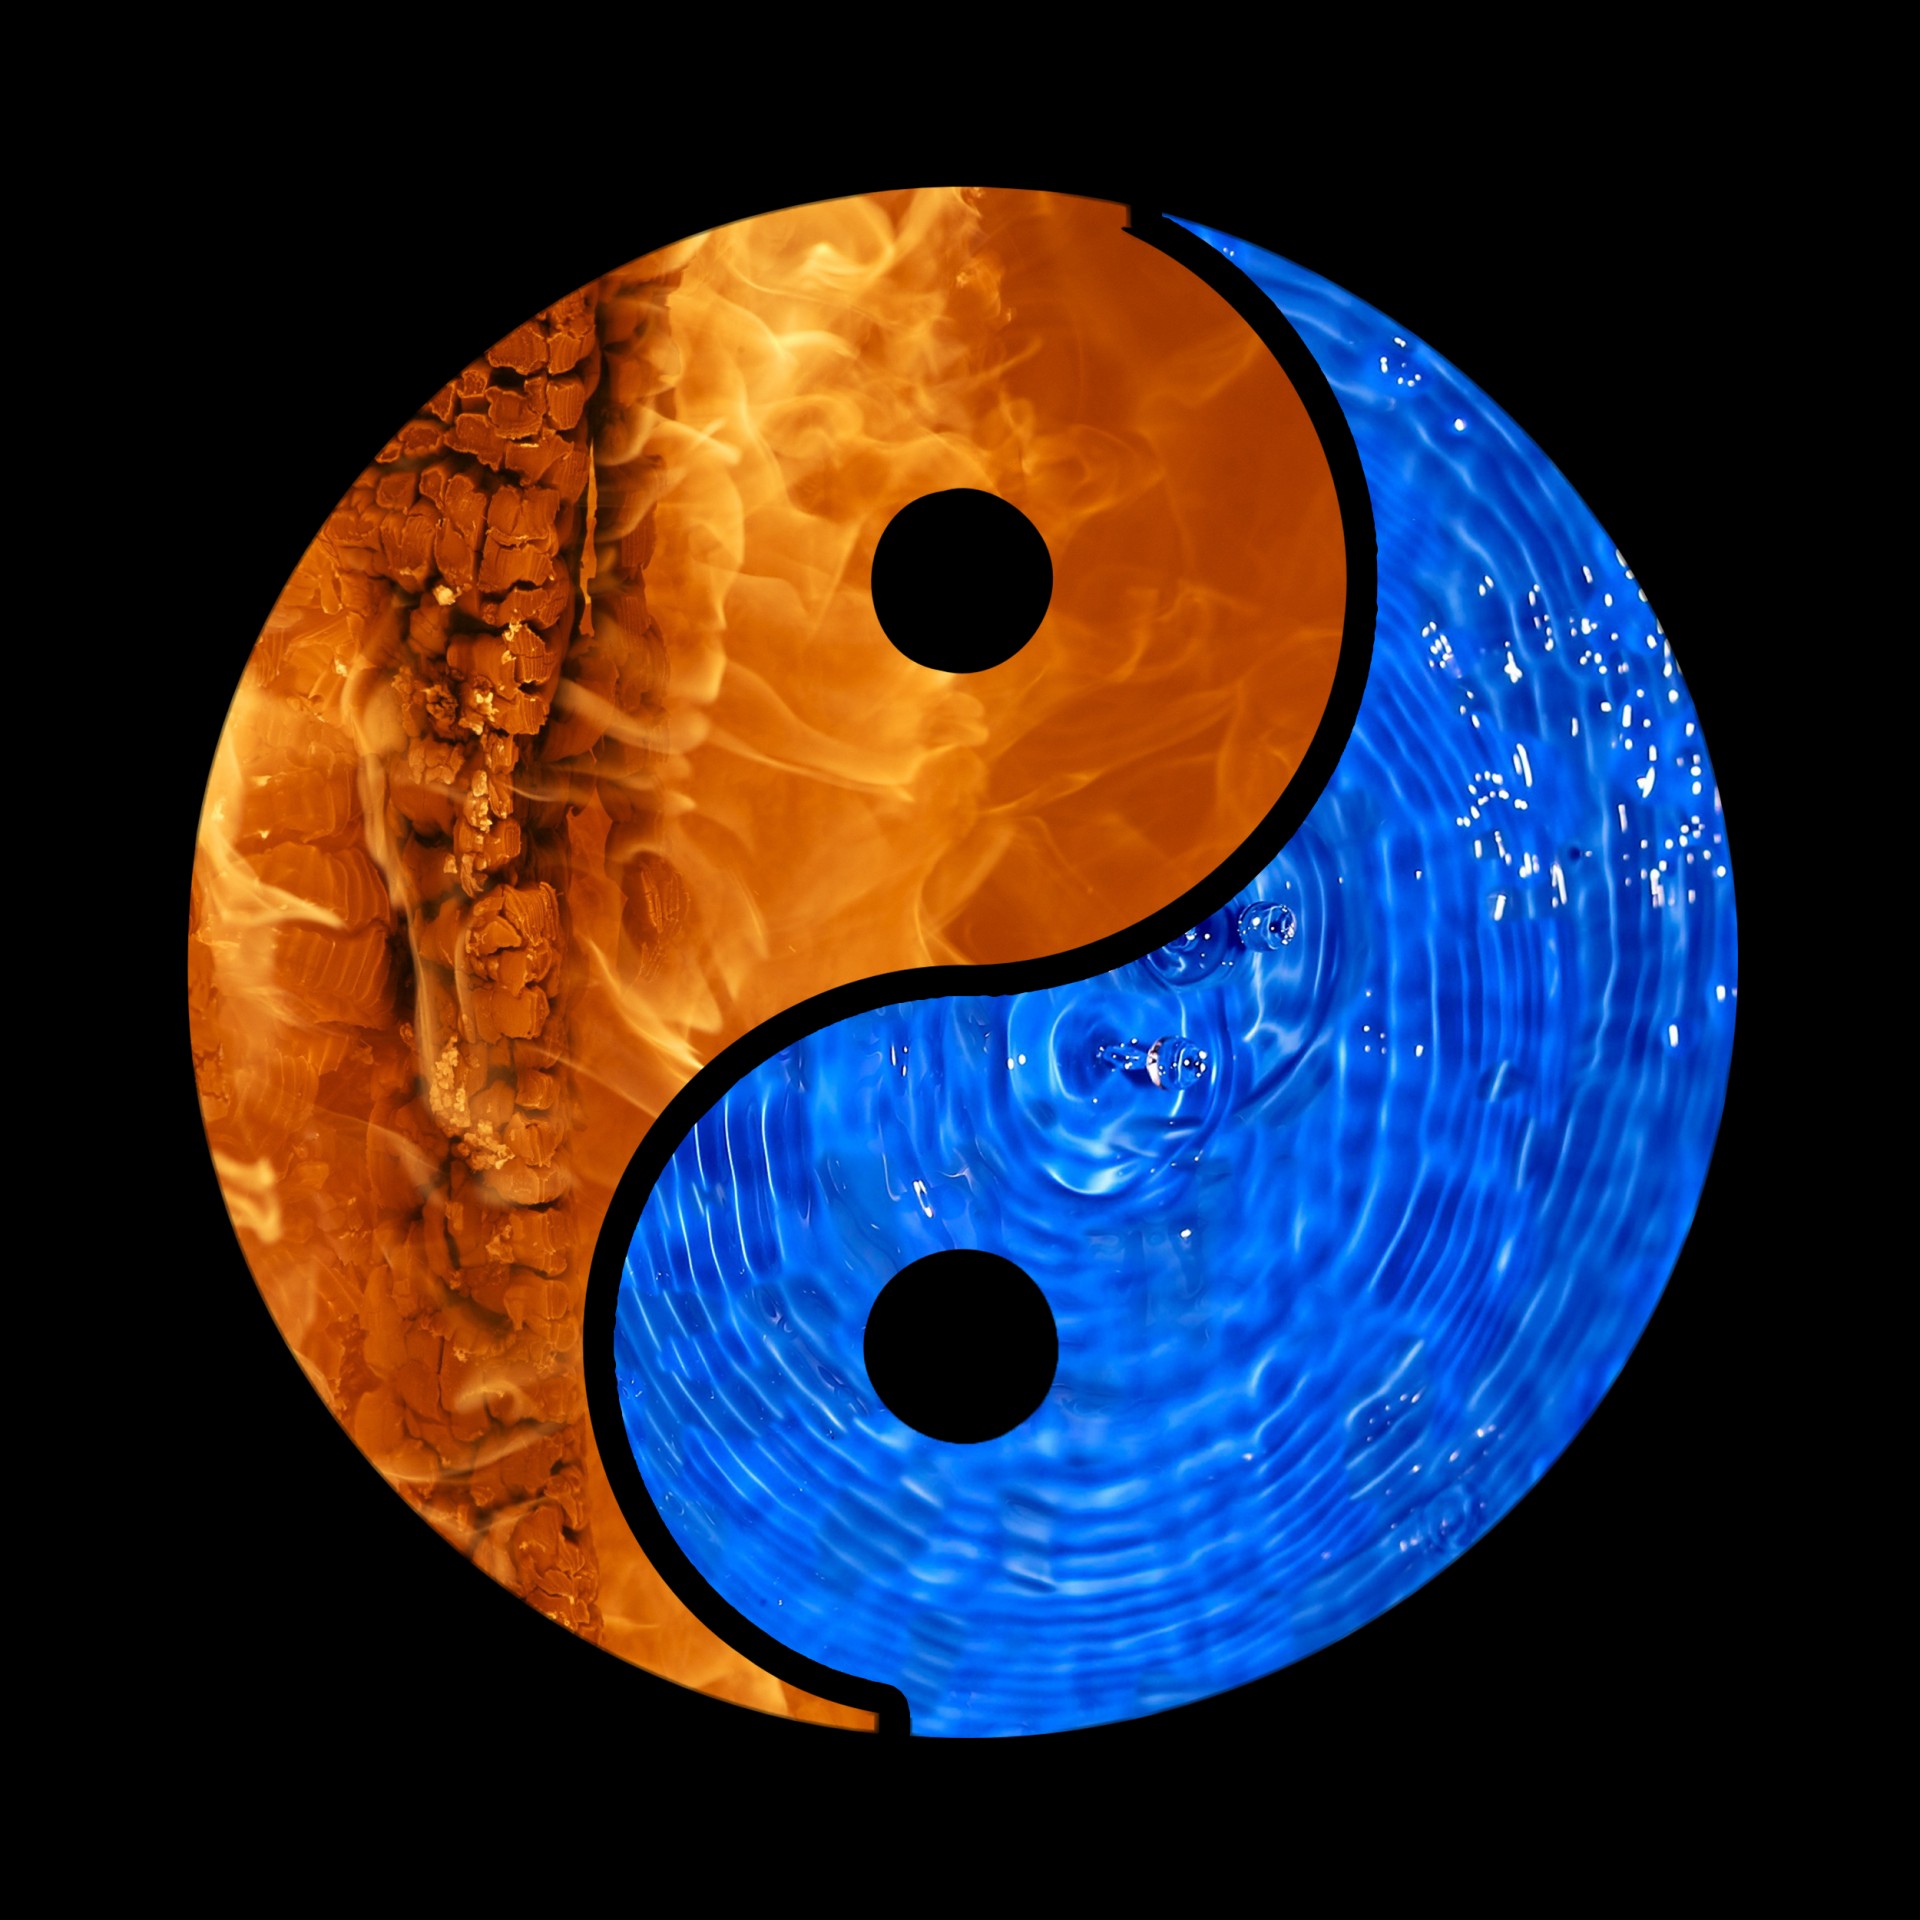 Yin Yang Symbol Kostenloses Stock Bild - Public Domain Pictures